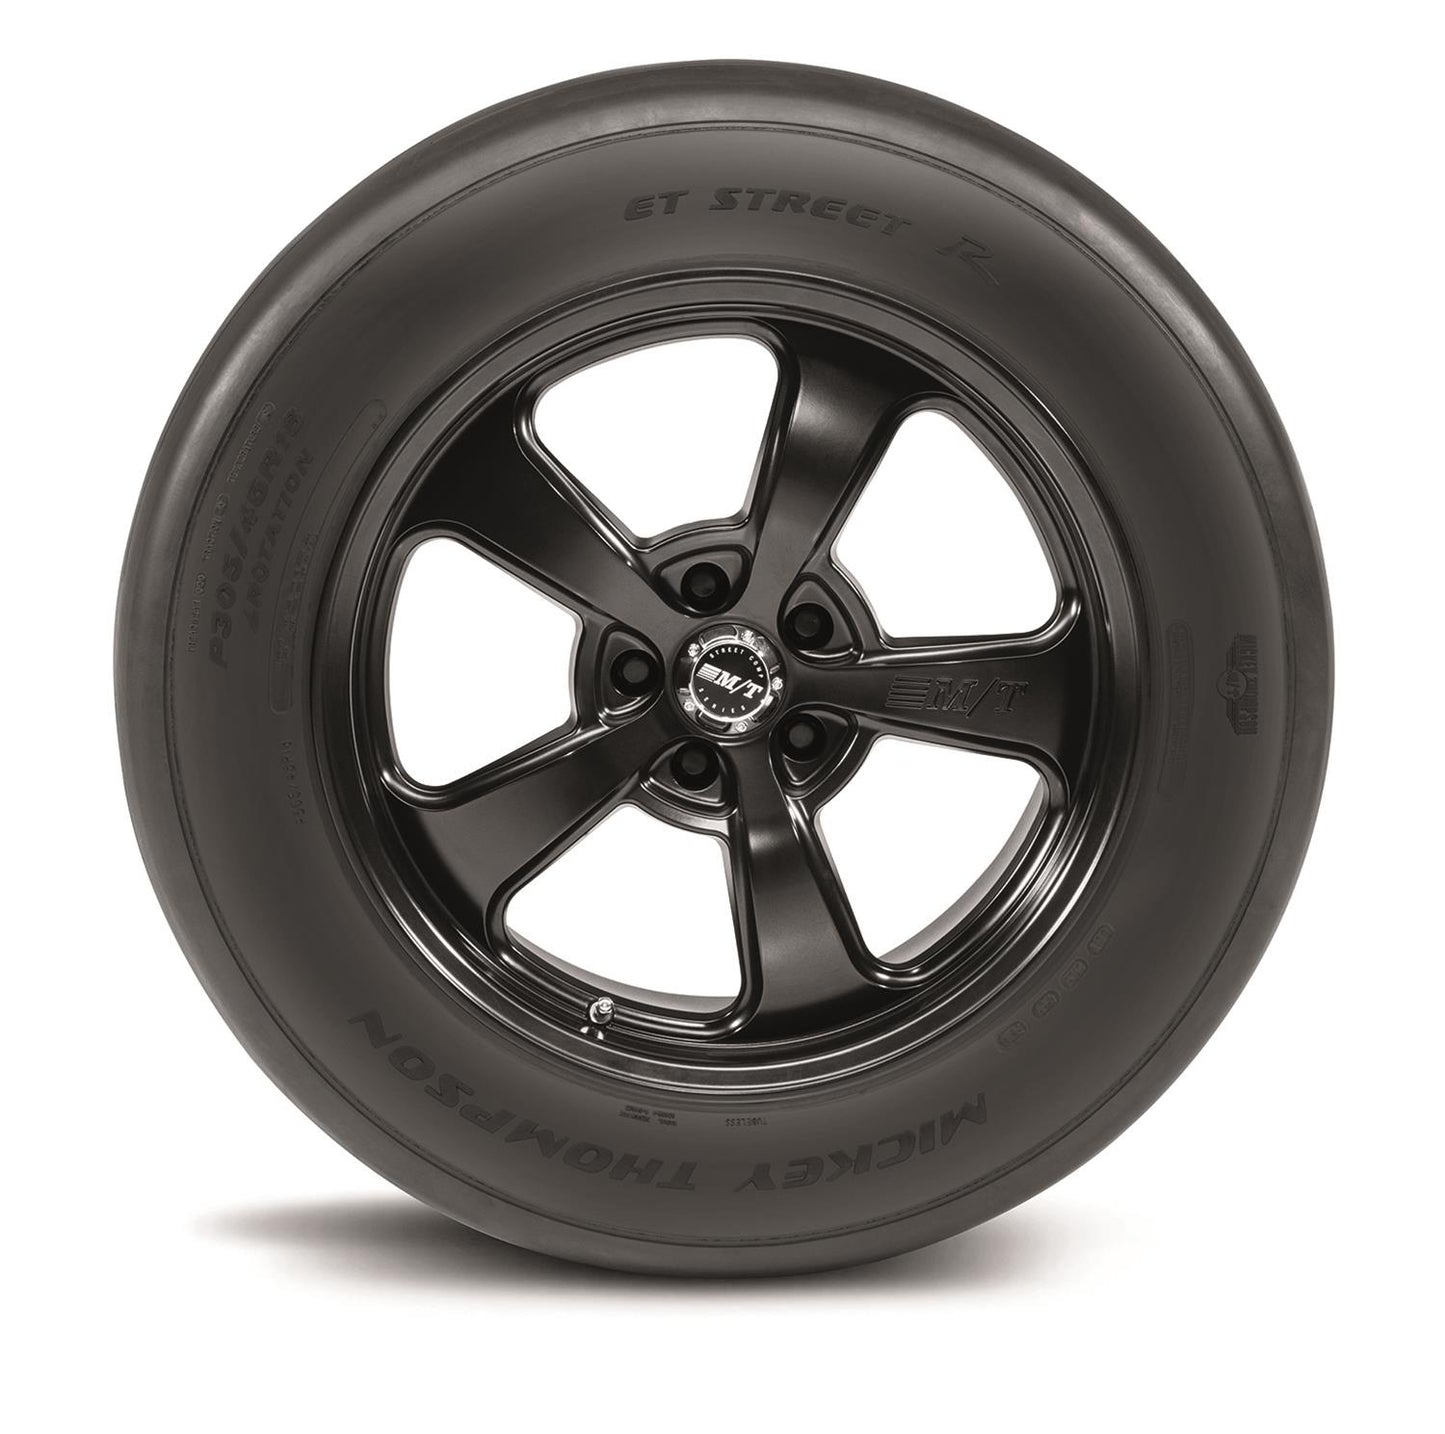 Mickey Thompson ET Street R Radial Tires 305/45/17